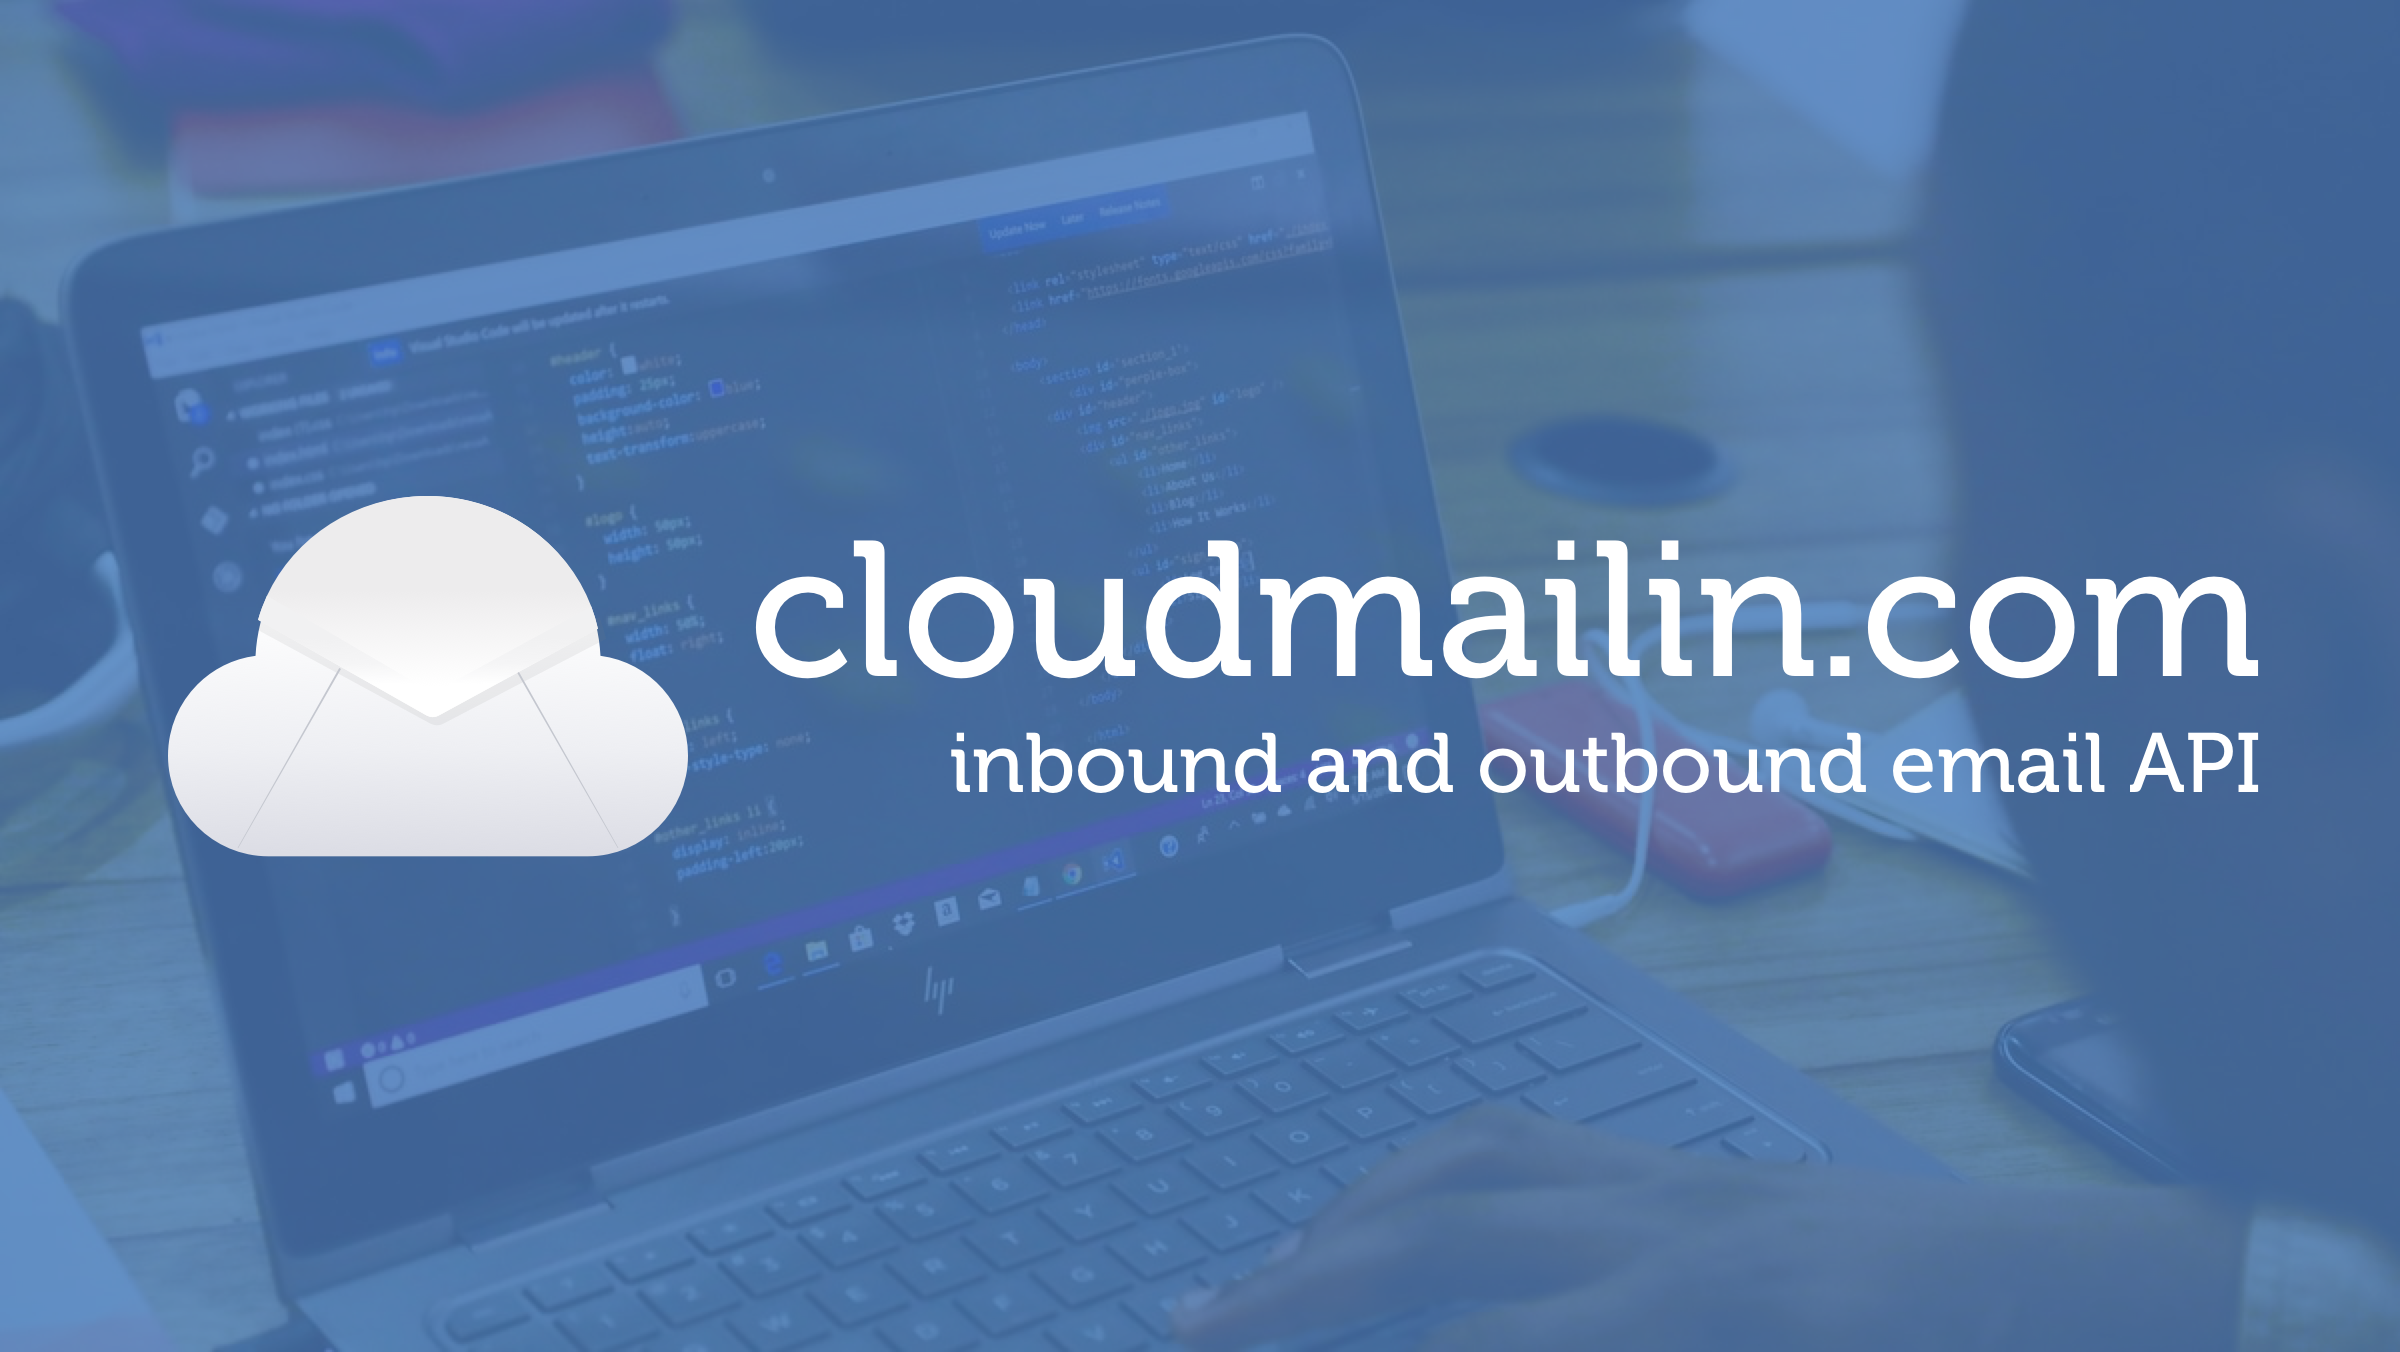 (c) Cloudmailin.com